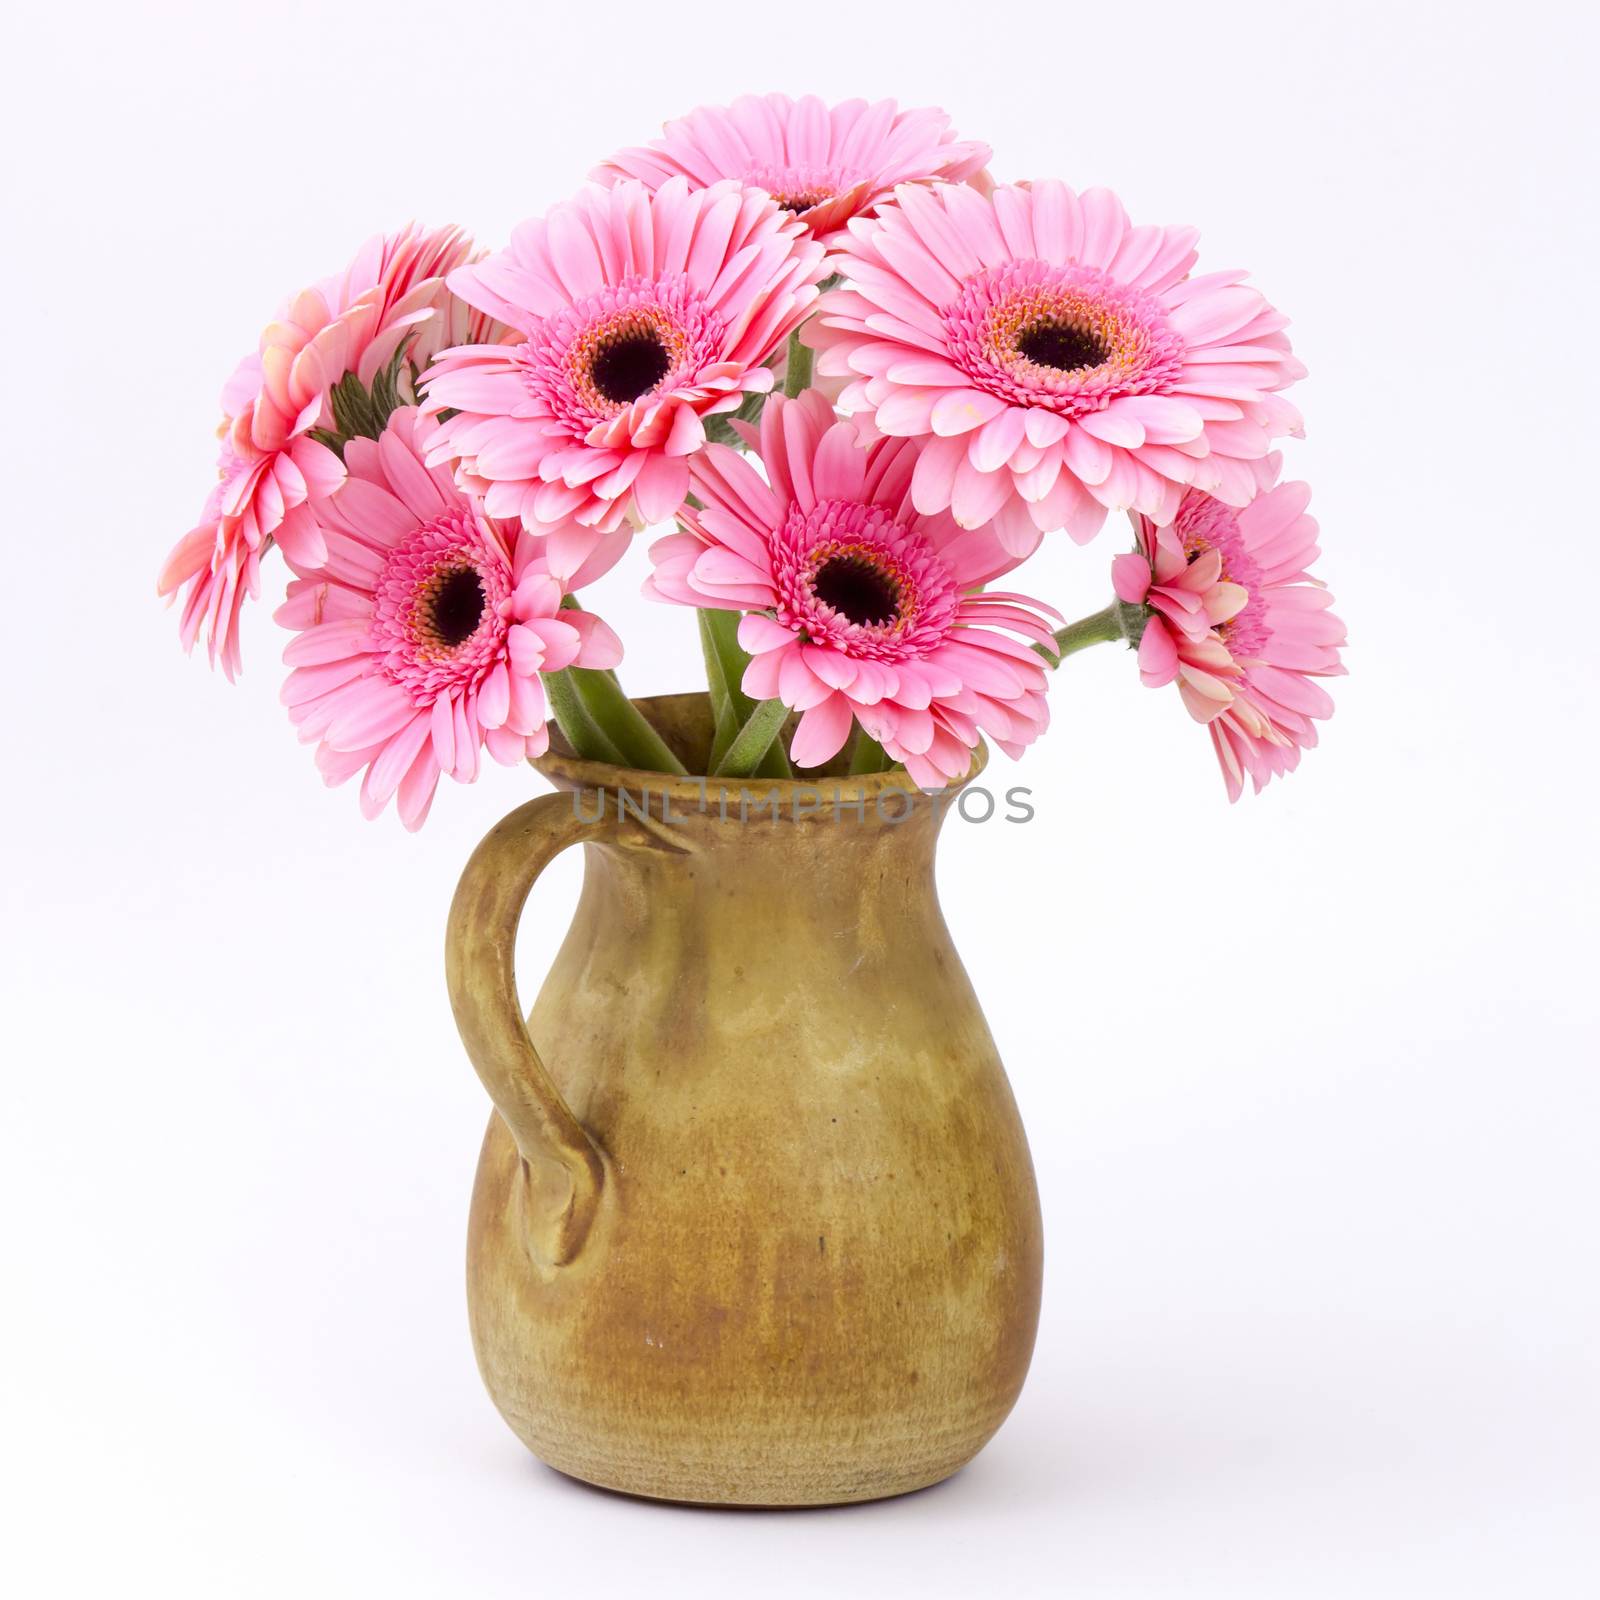 pink gerbera flowers in a vase by miradrozdowski